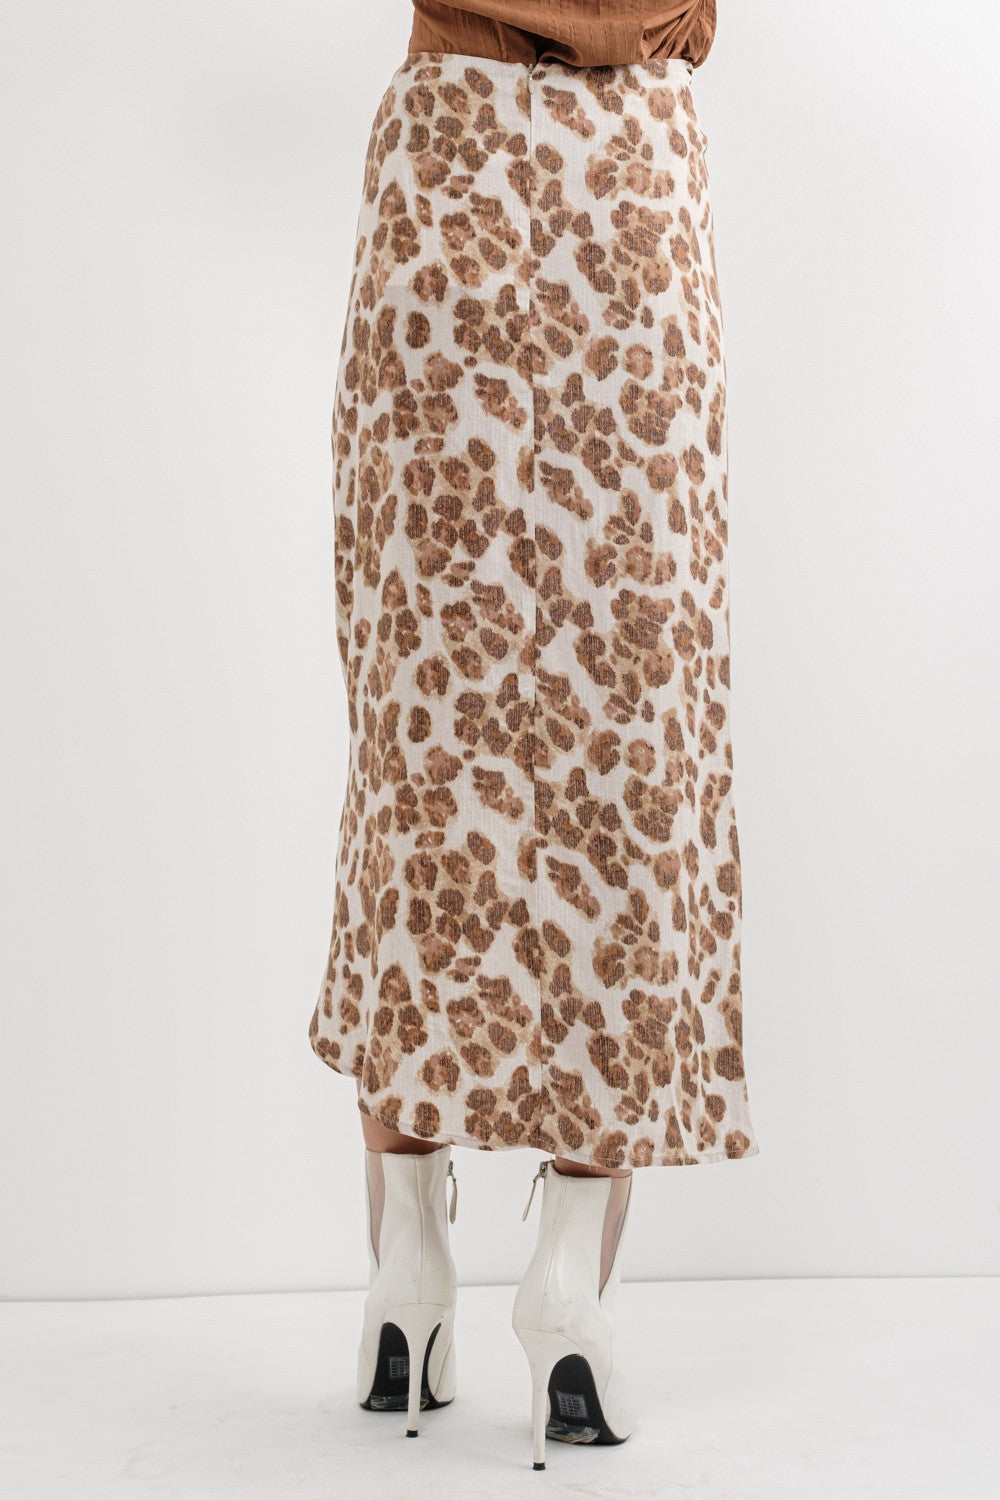 The Lila Leopard Skirt